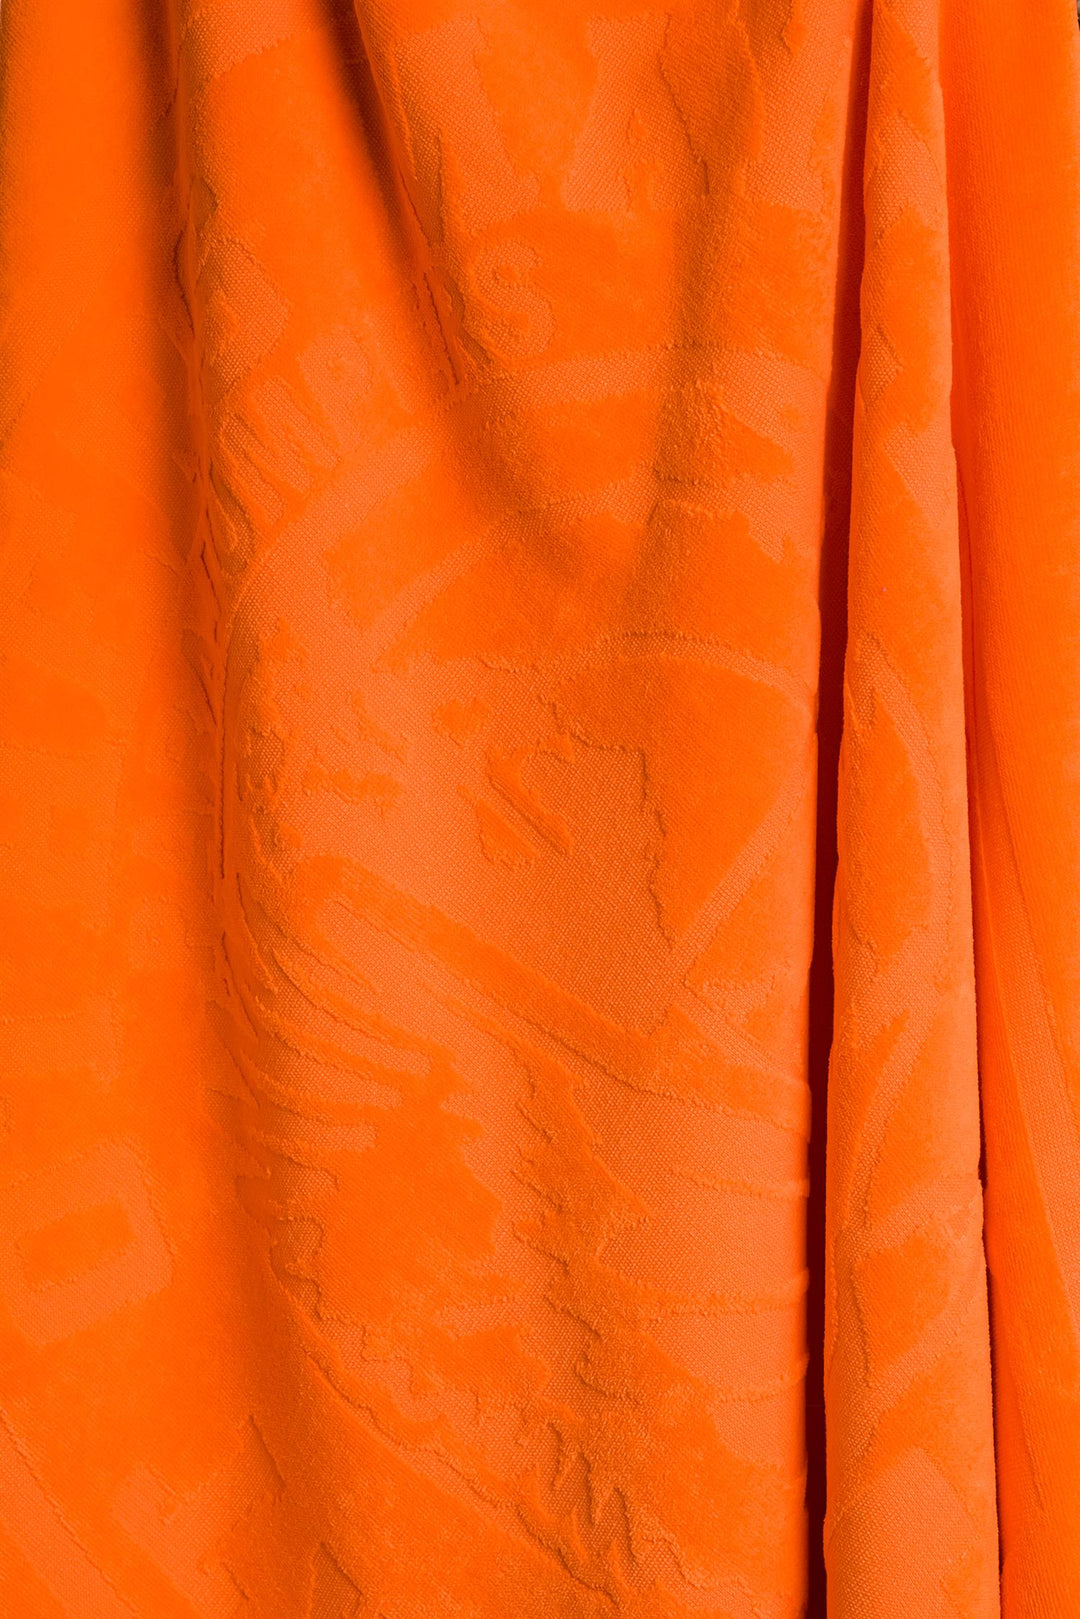 BEACH TOWEL  Orange